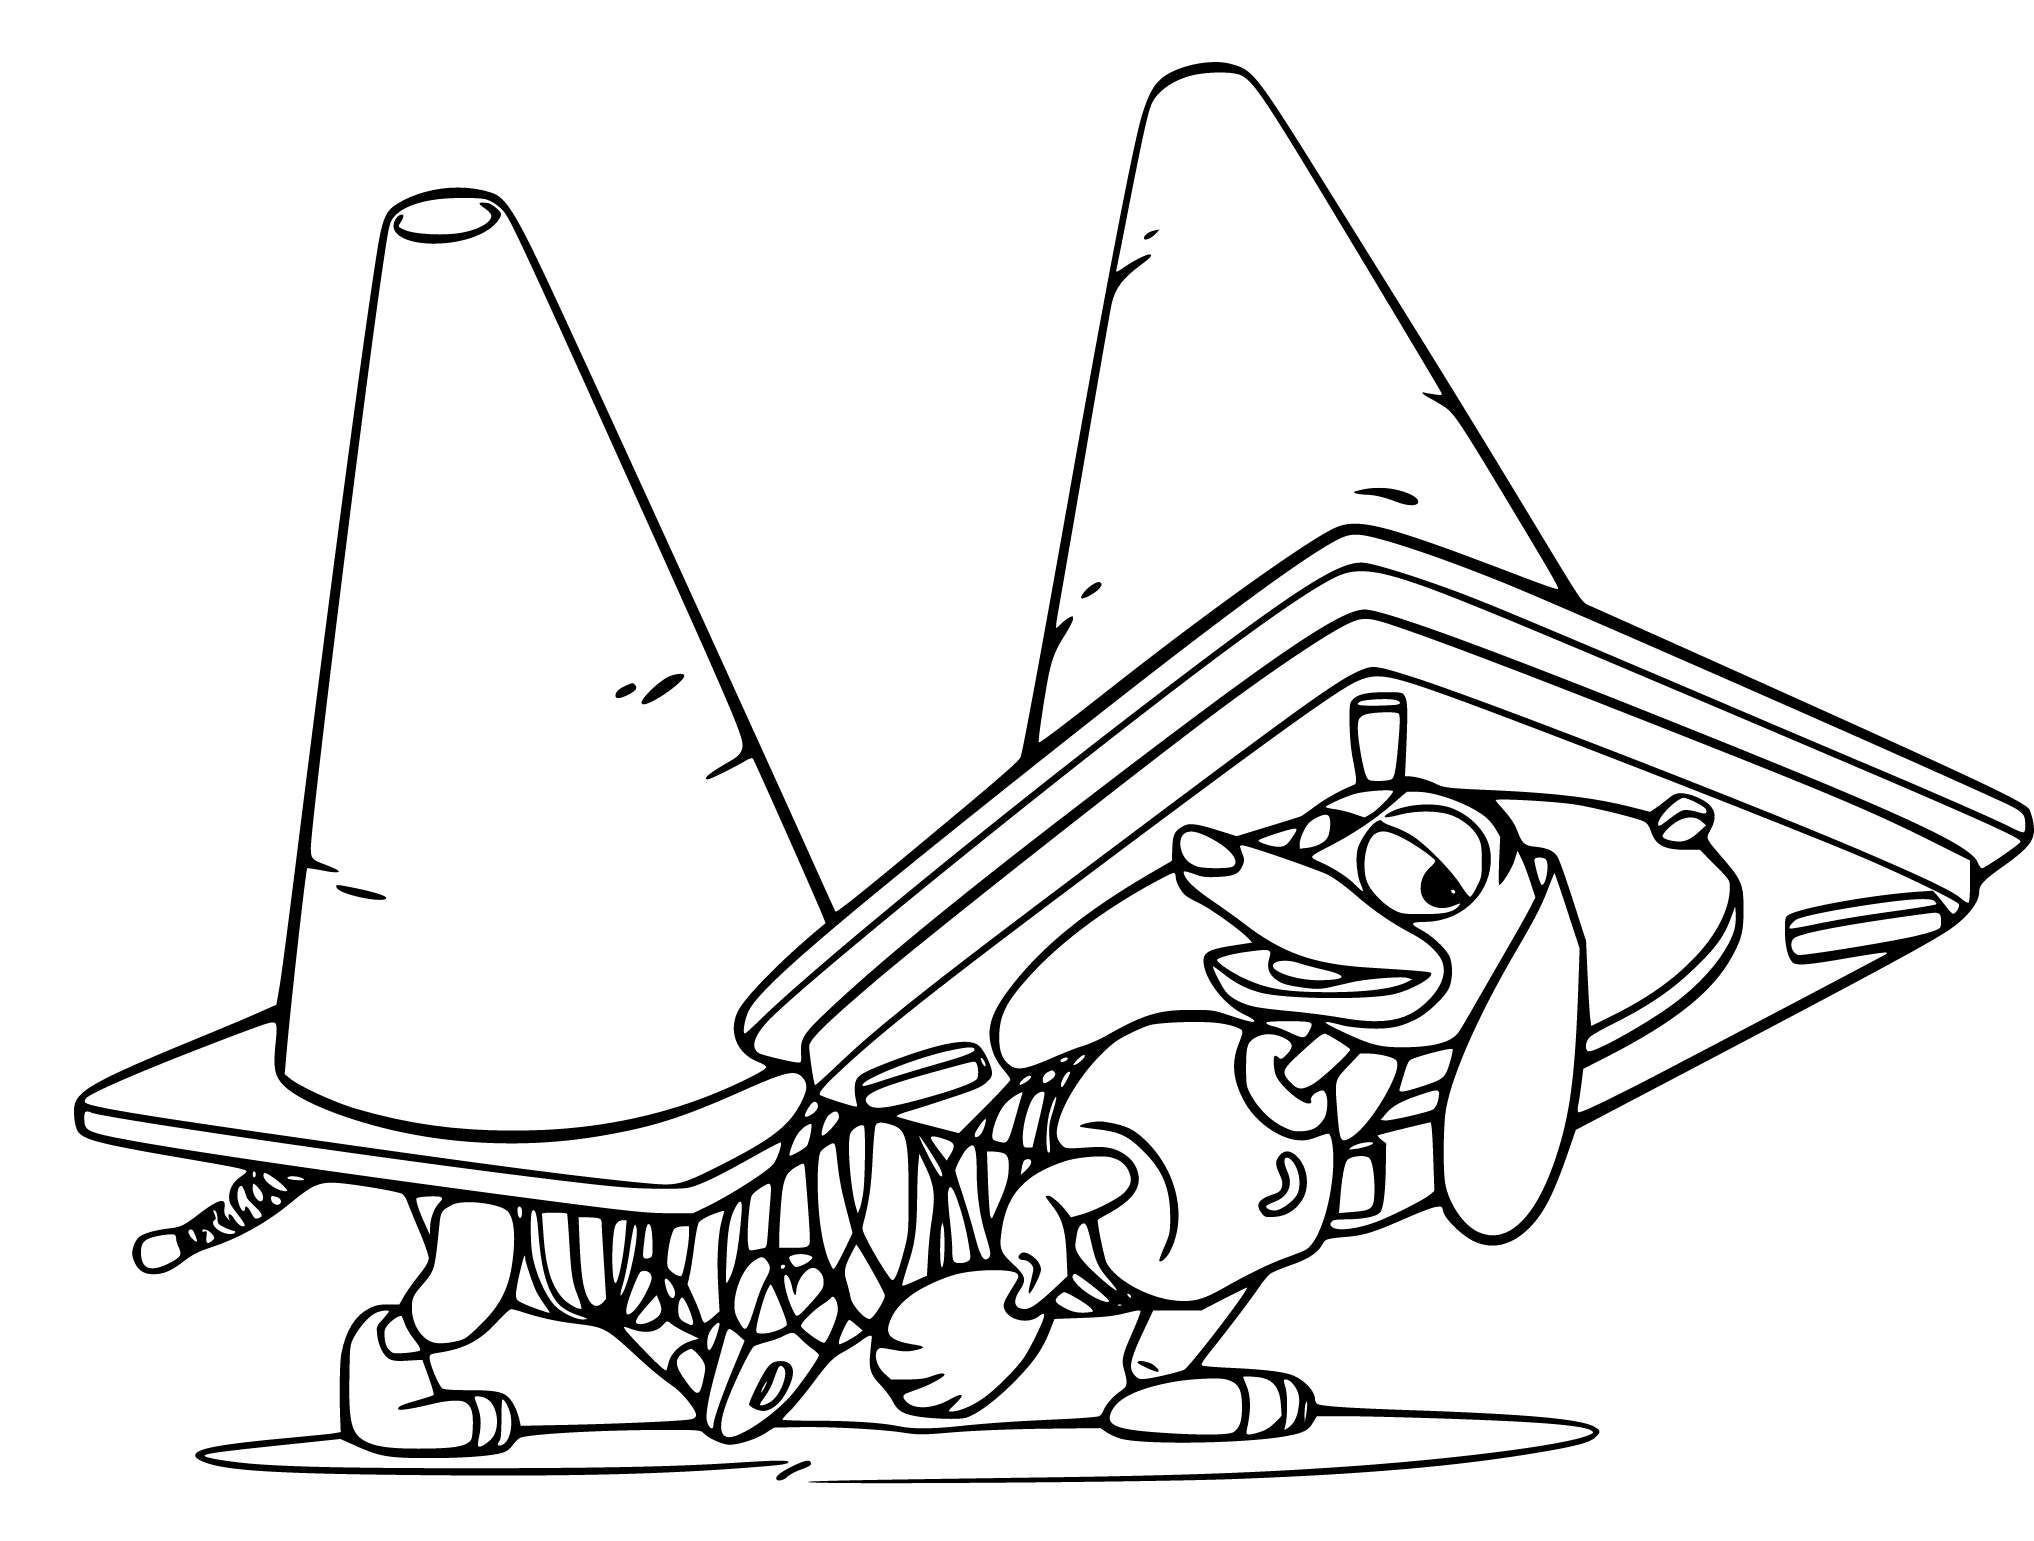 Toy Story's Slinky Dog Coloring Sheet for Kids - SheetalColor.com